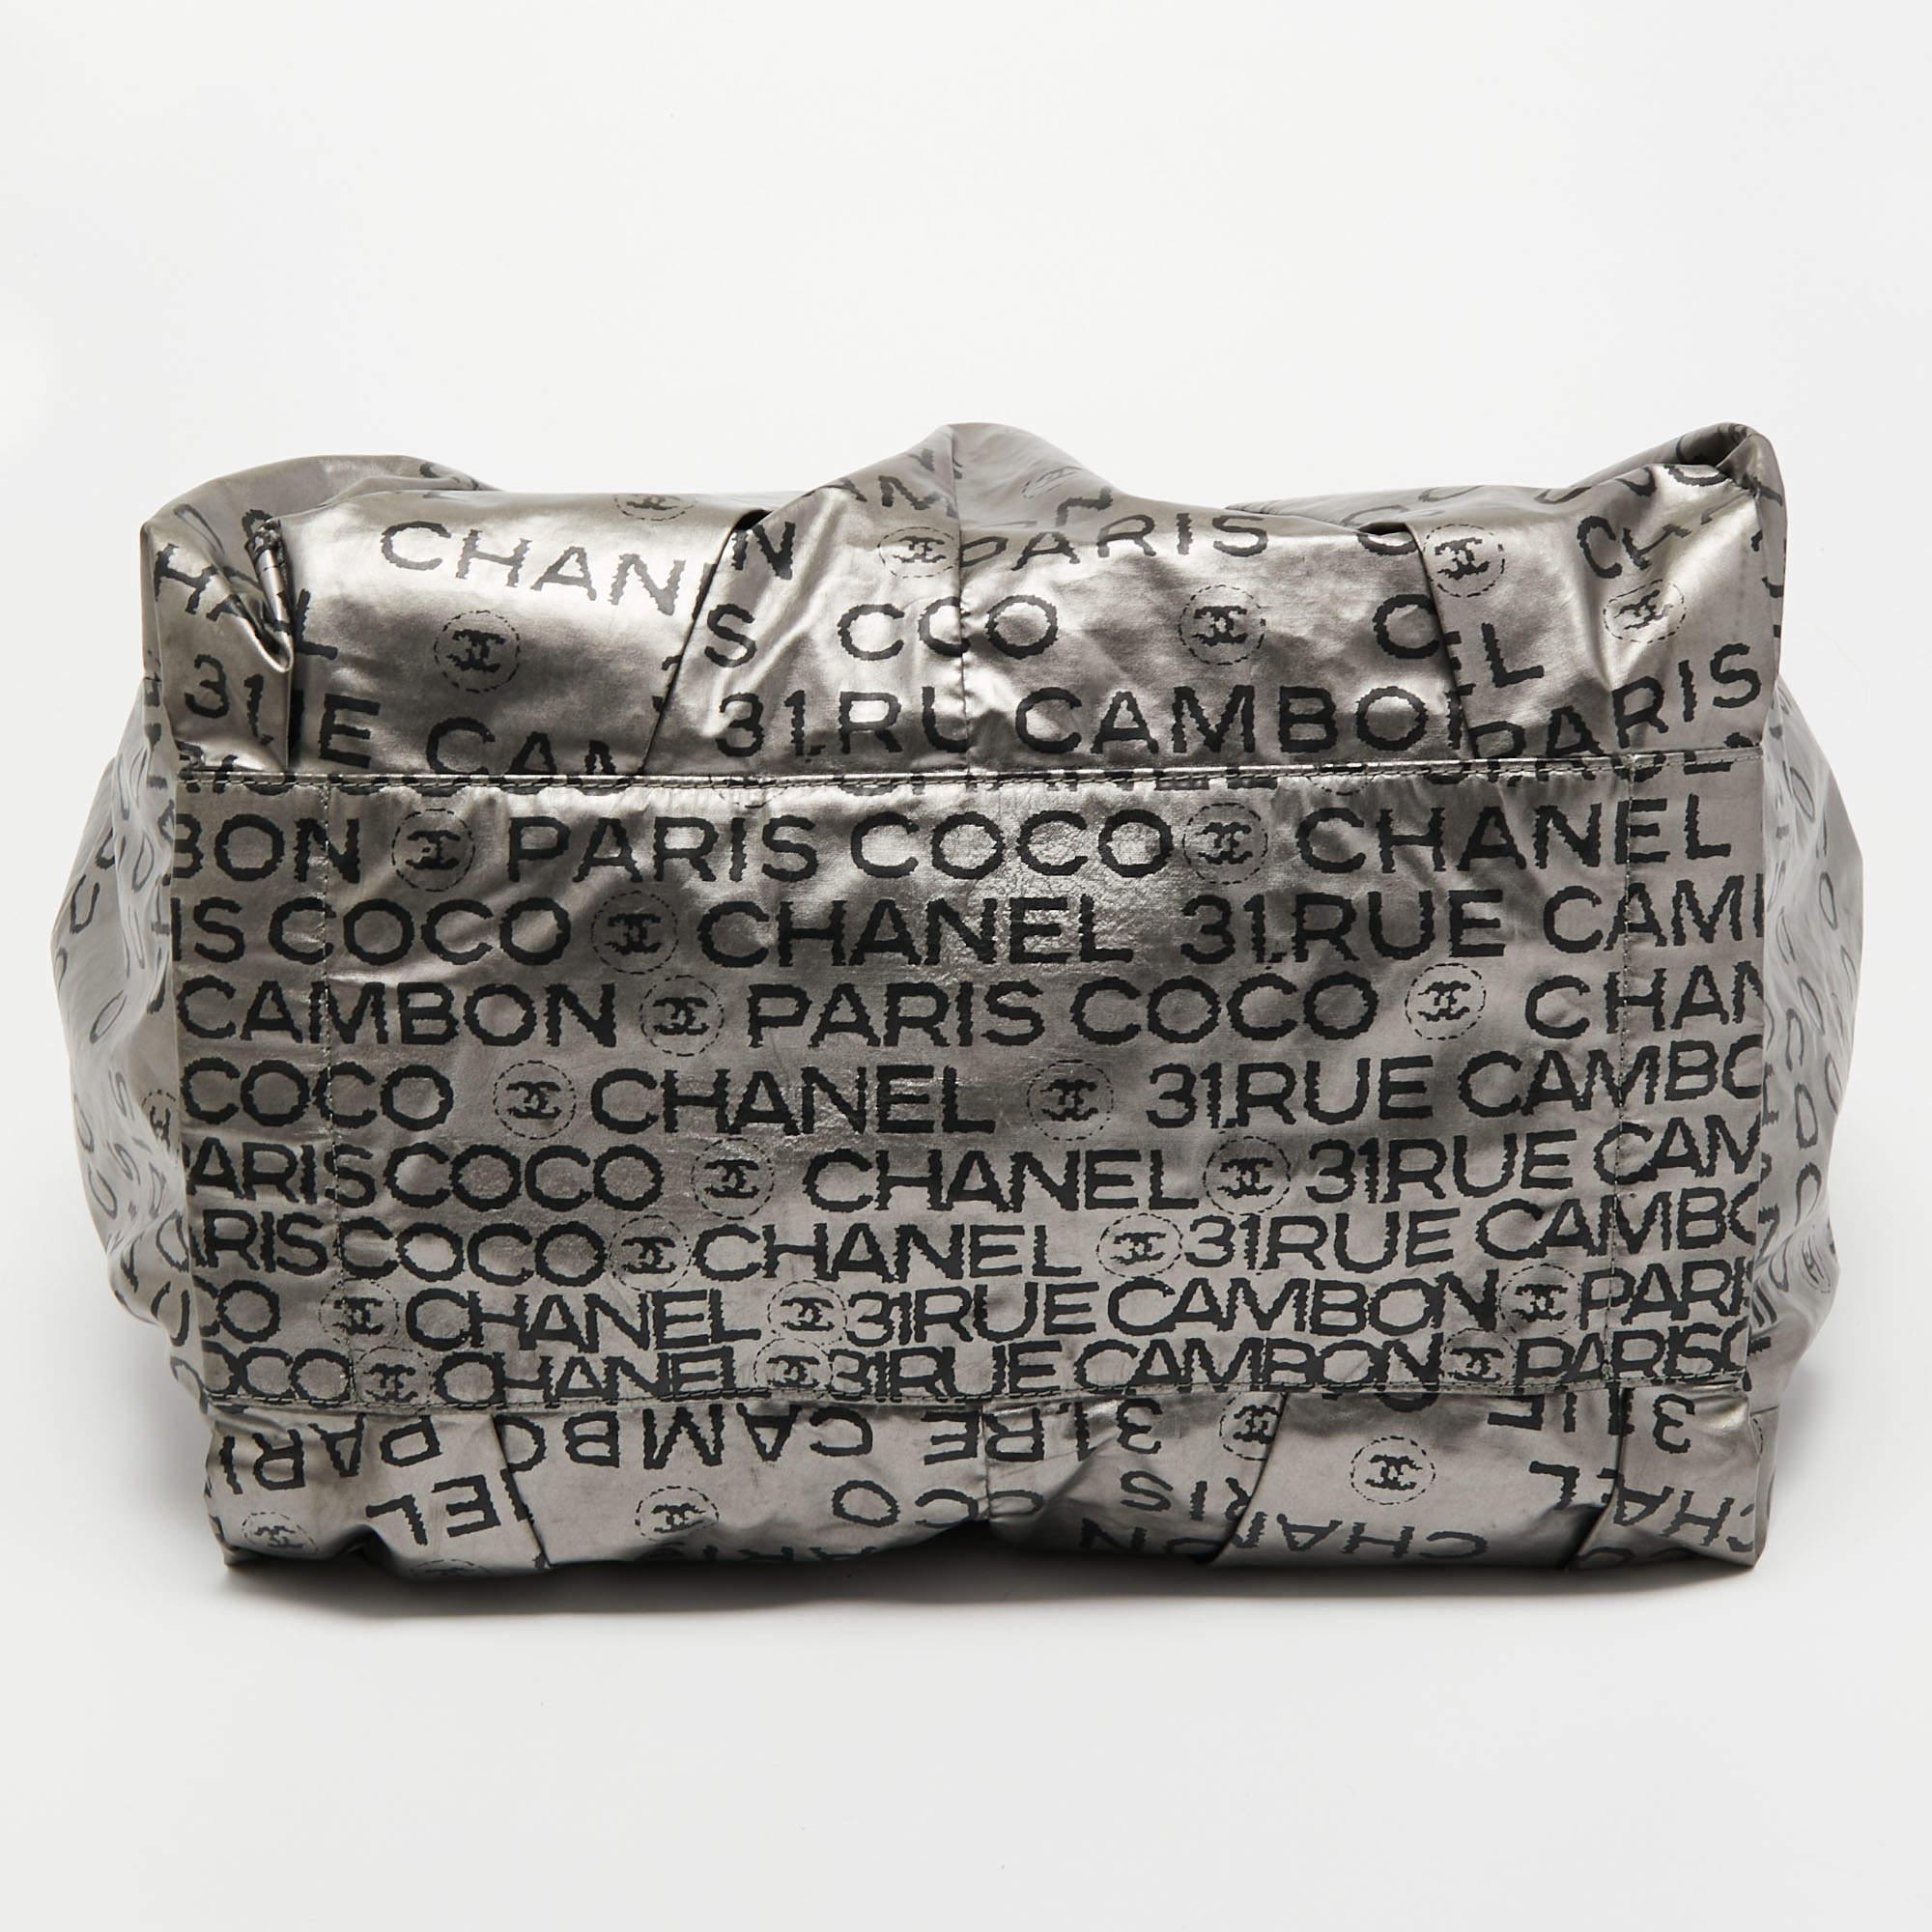 Chanel Silver Coated Nylon 31 Rue Cambon Shoulder Bag 1